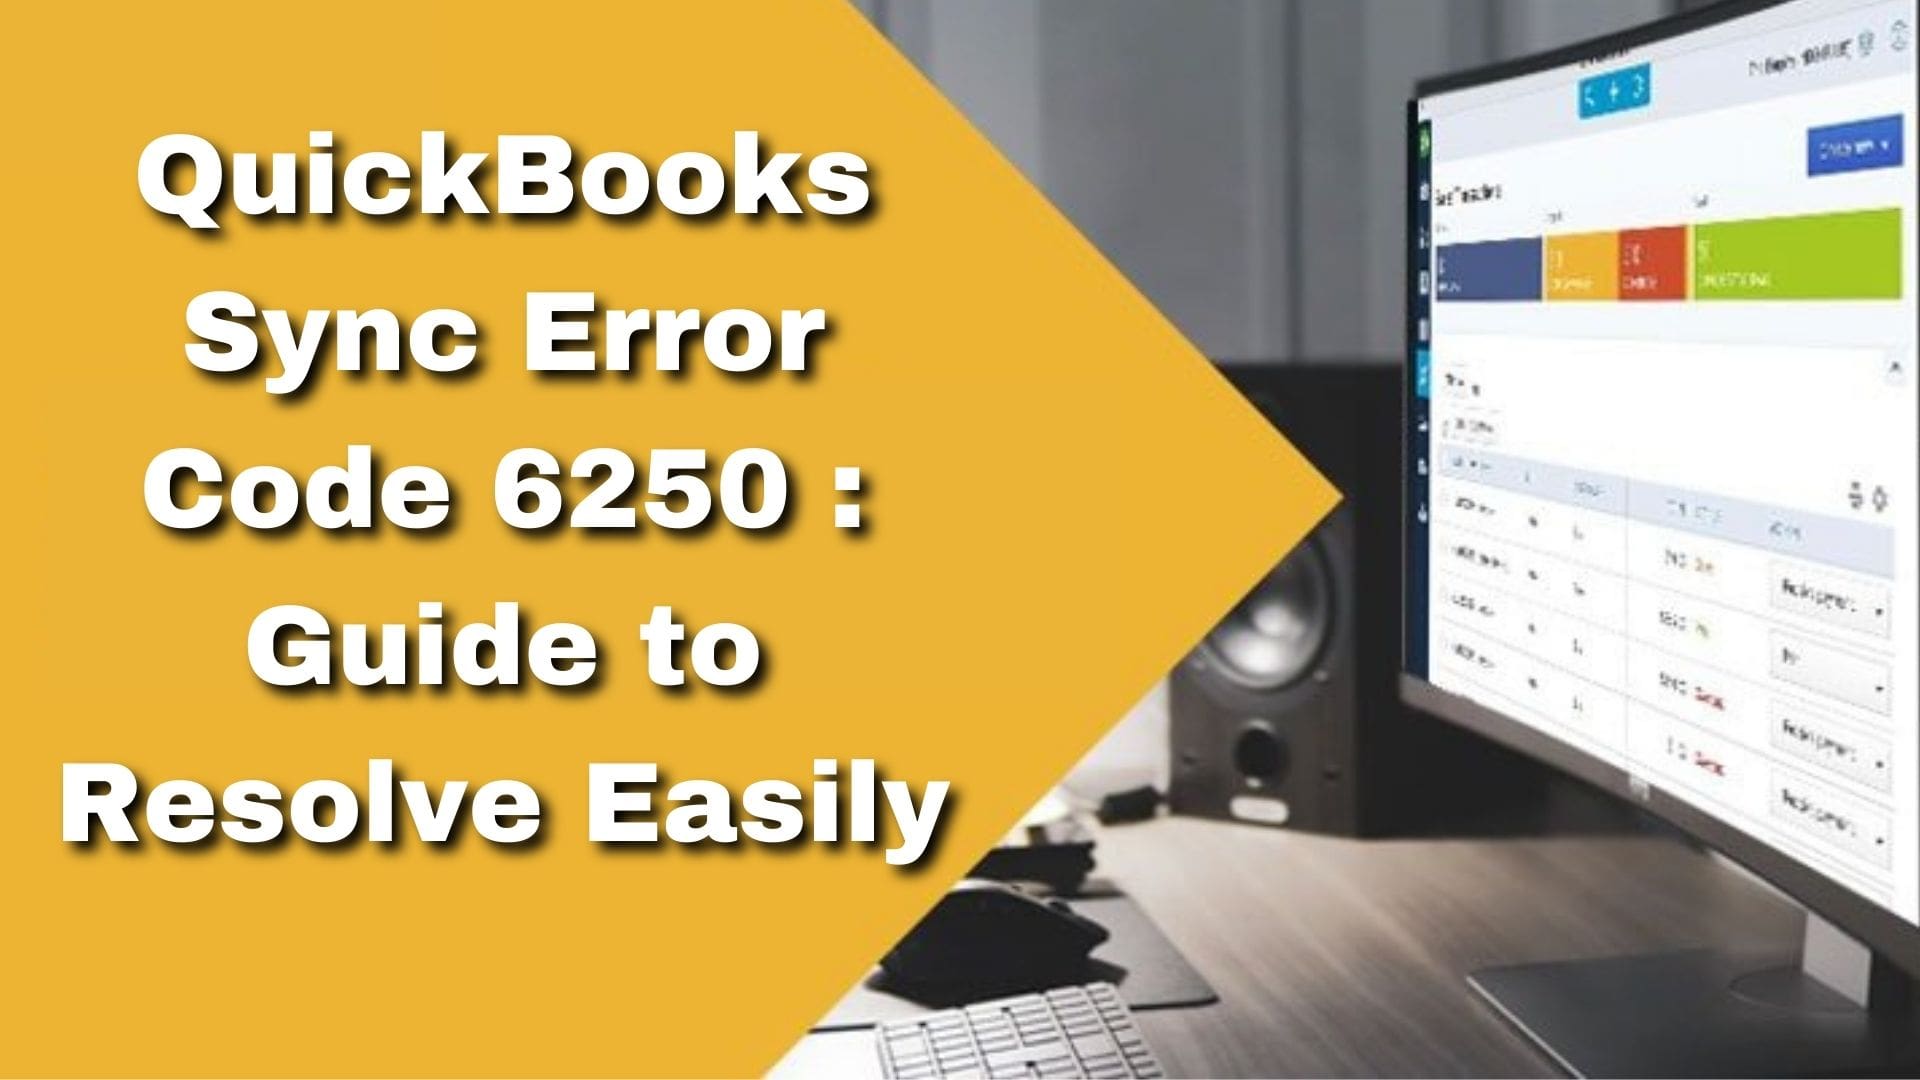 Easy Guide To Resolve Quickbooks Sync Error Code 6250